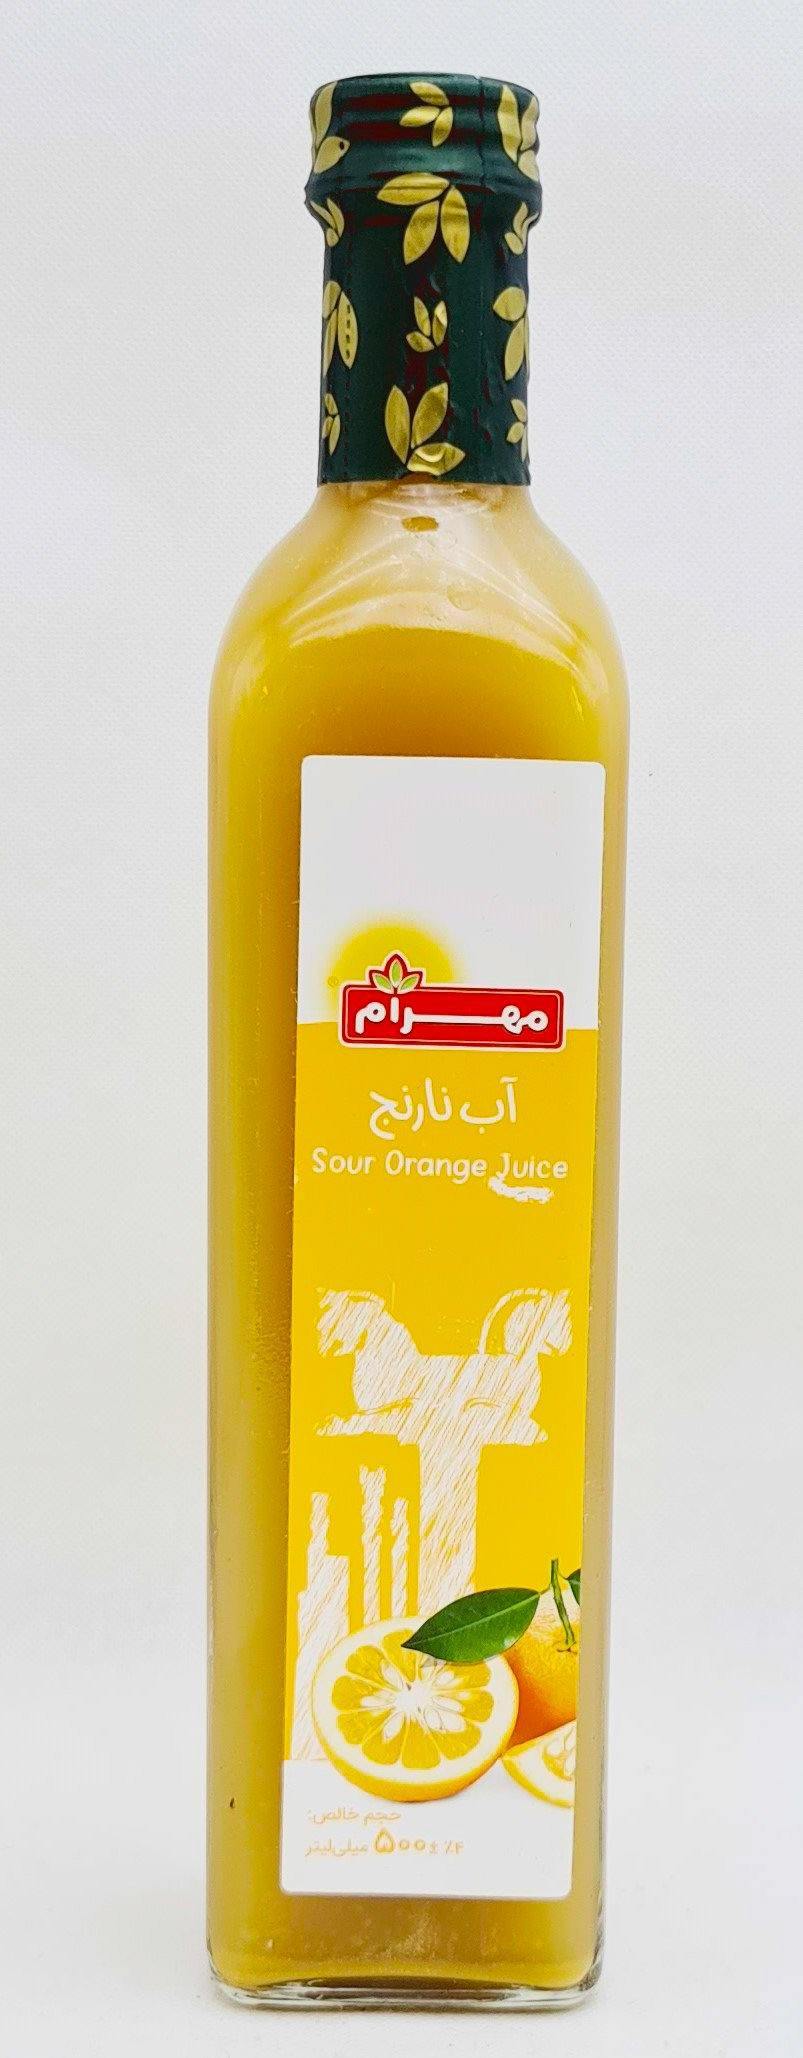 Mahram Abe Narenj - Saurer Orangensaft 500ml - Persienmarkt